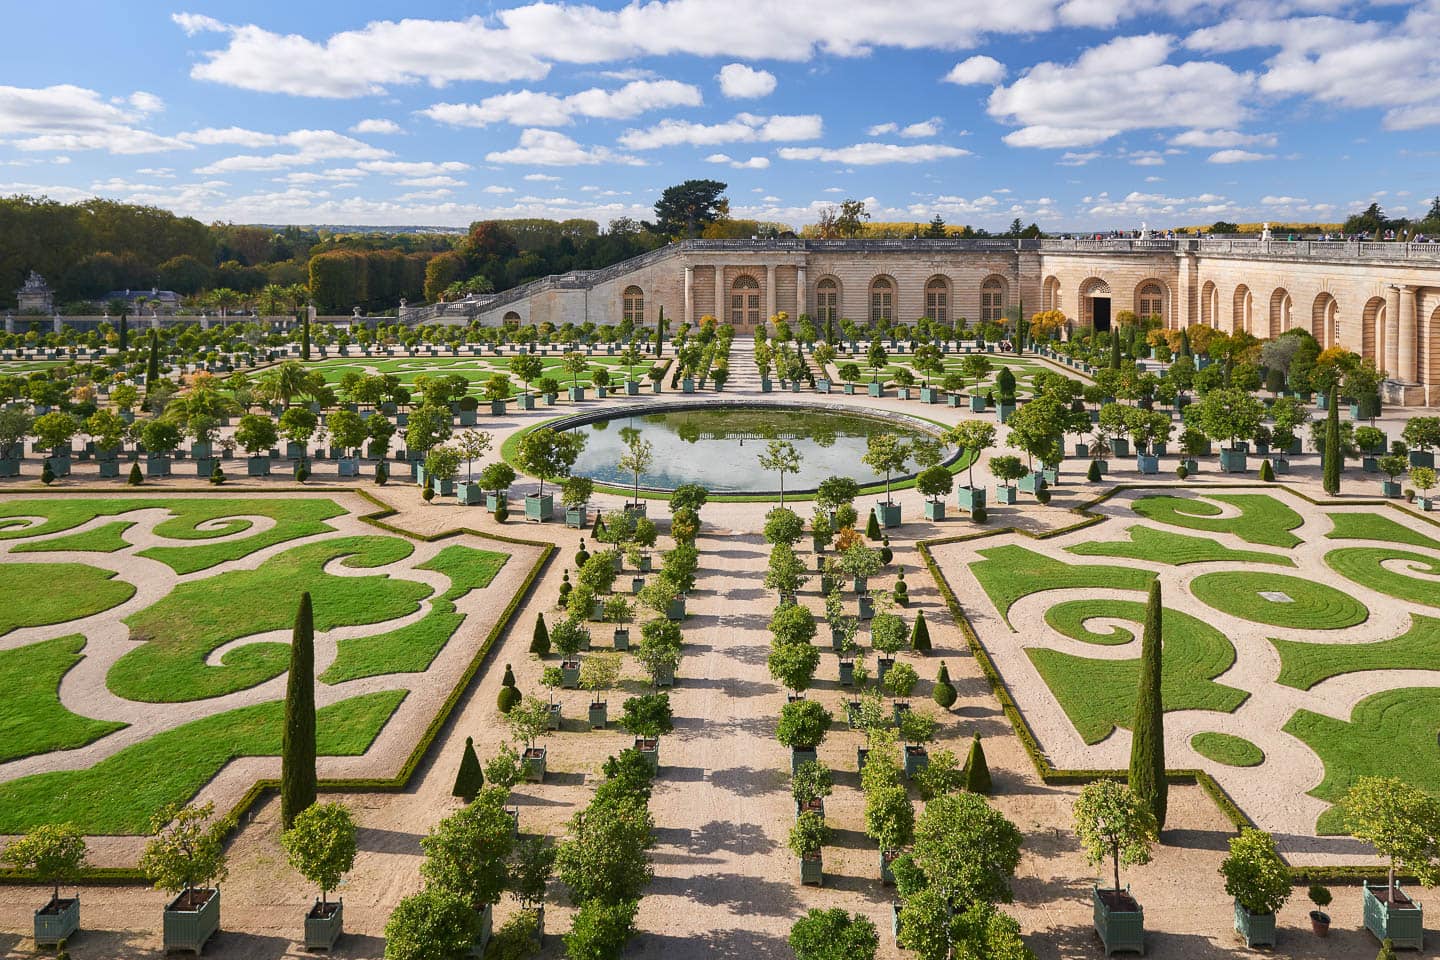 The geometric formal garden at Versailles